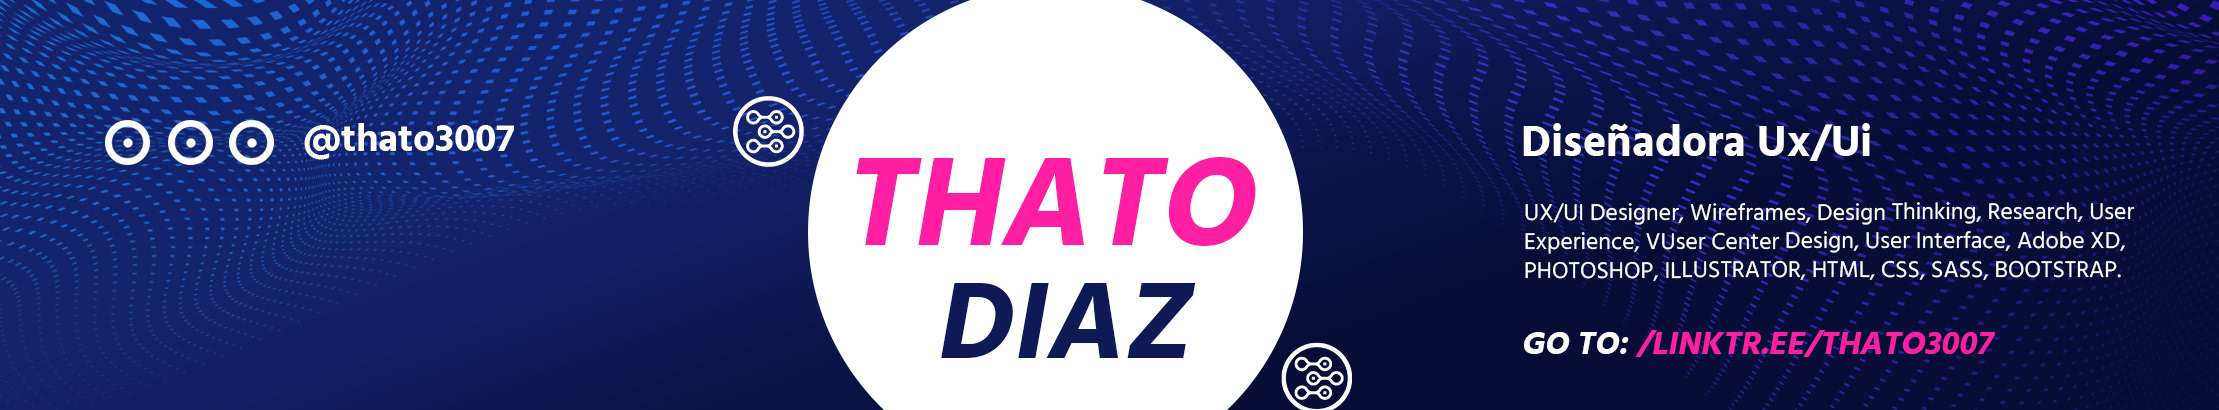 Profil-Banner von Tatiana Diaz (Thato)